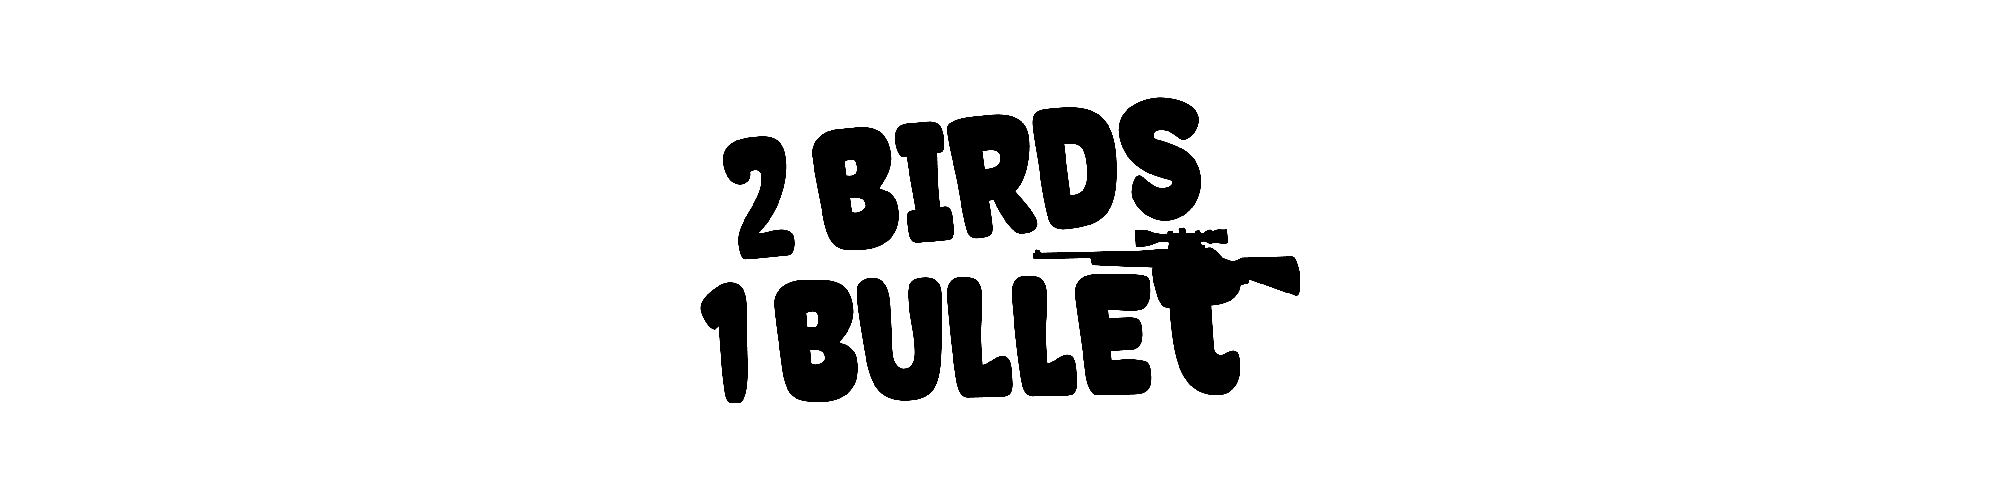 Two Birds One Bullet - PROTOTYPE